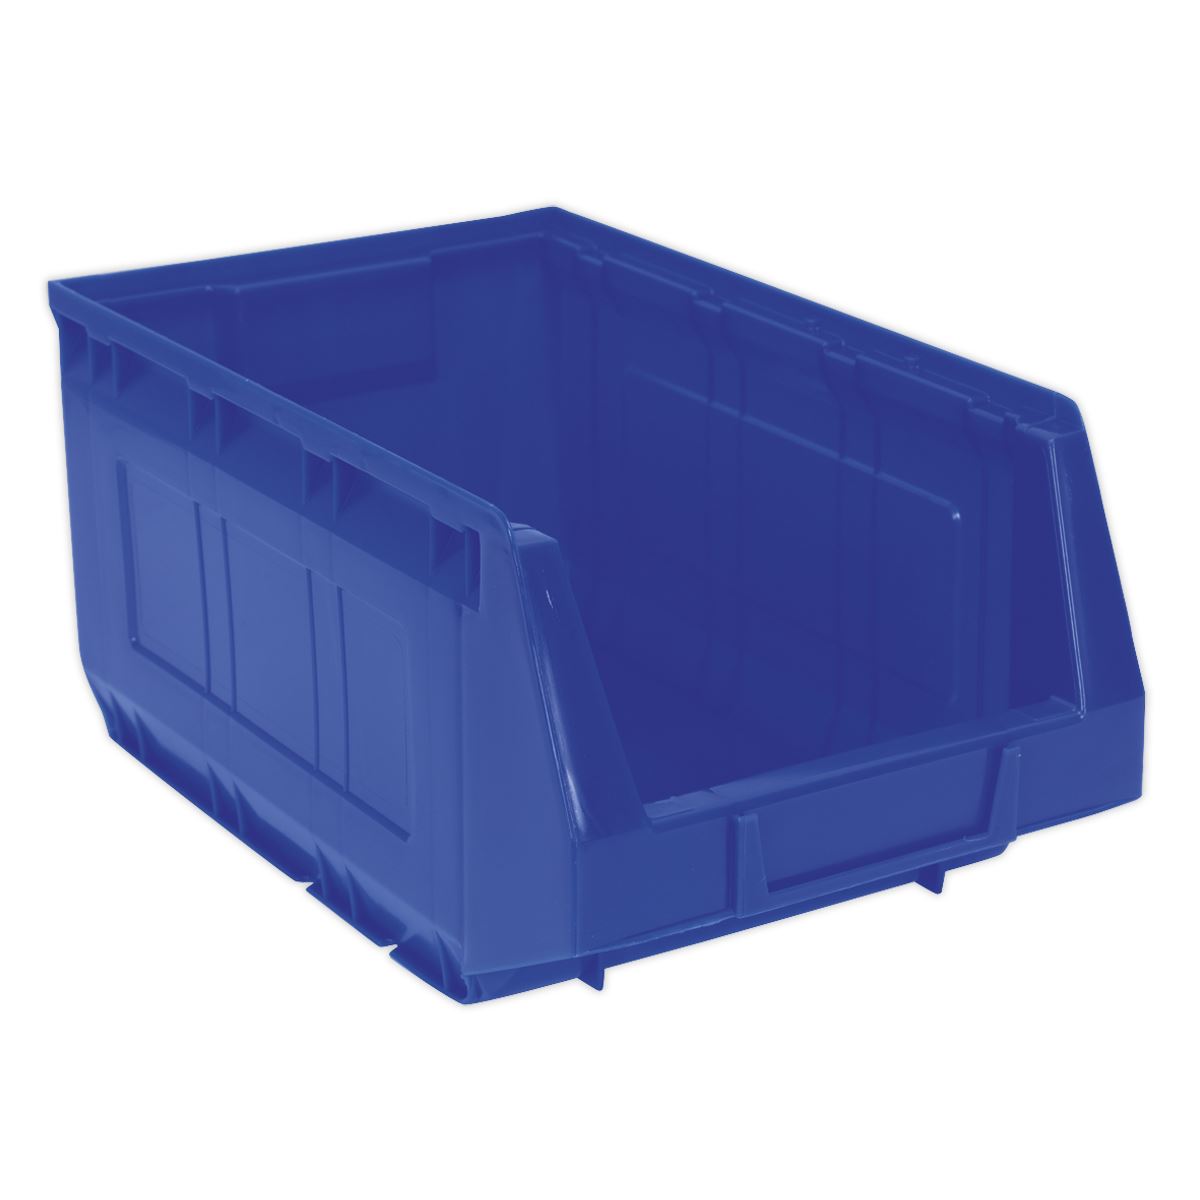 Sealey Plastic Storage Bin 210 x 355 x 165mm - Blue Pack of 12